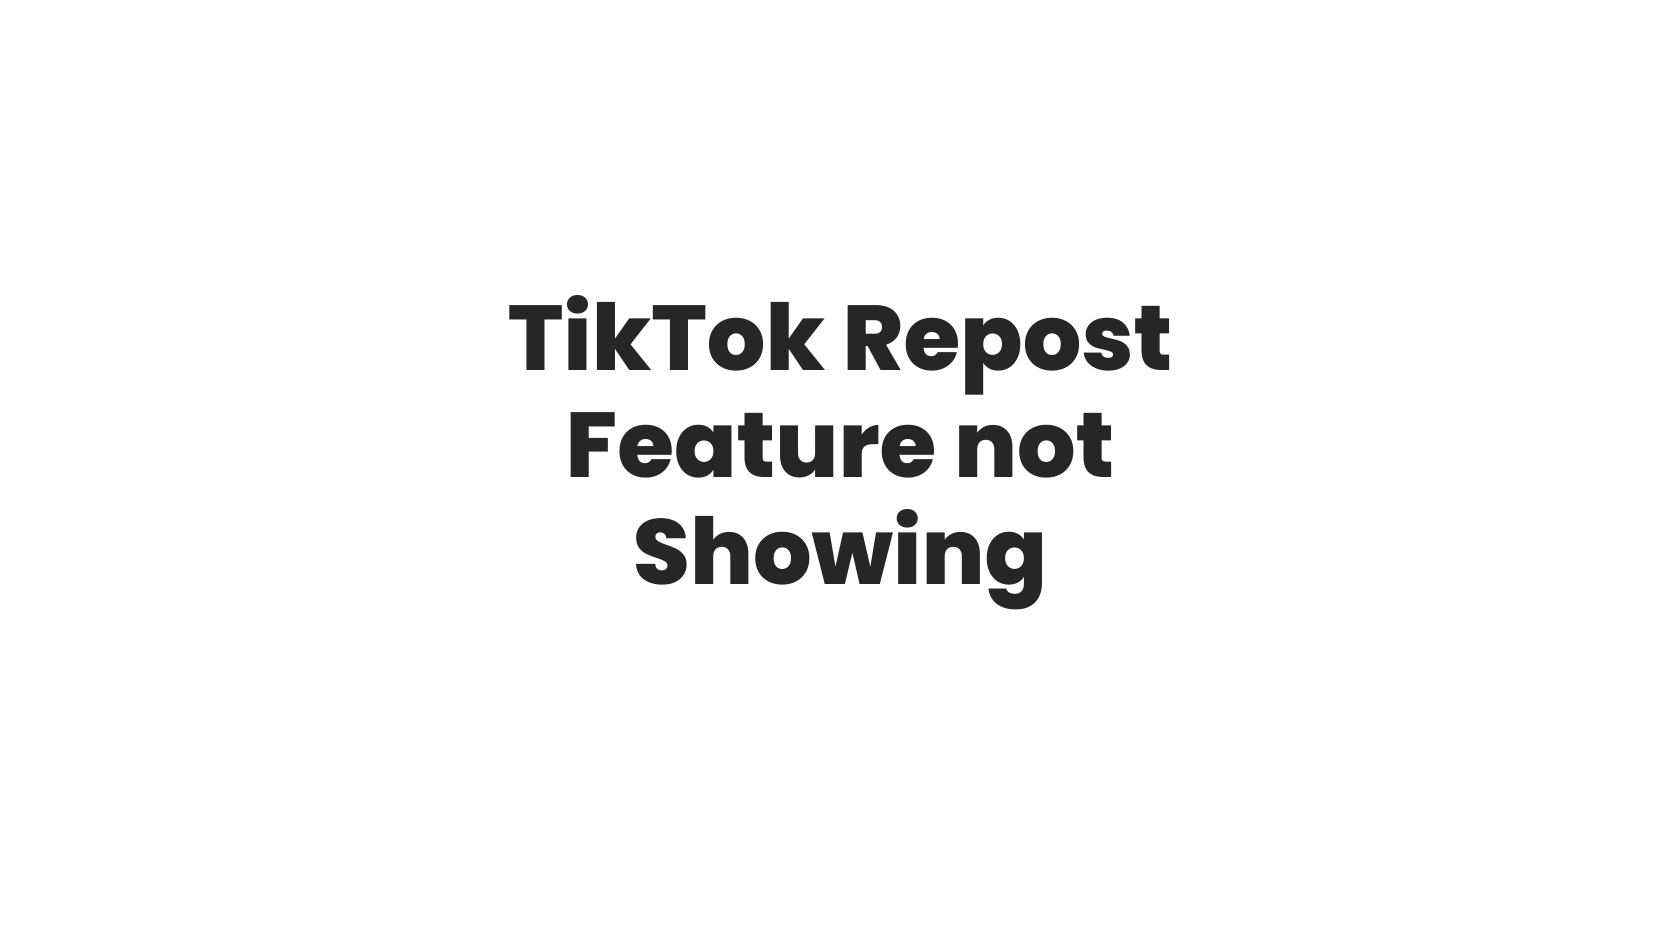 TikTok Repost Feature not Showing